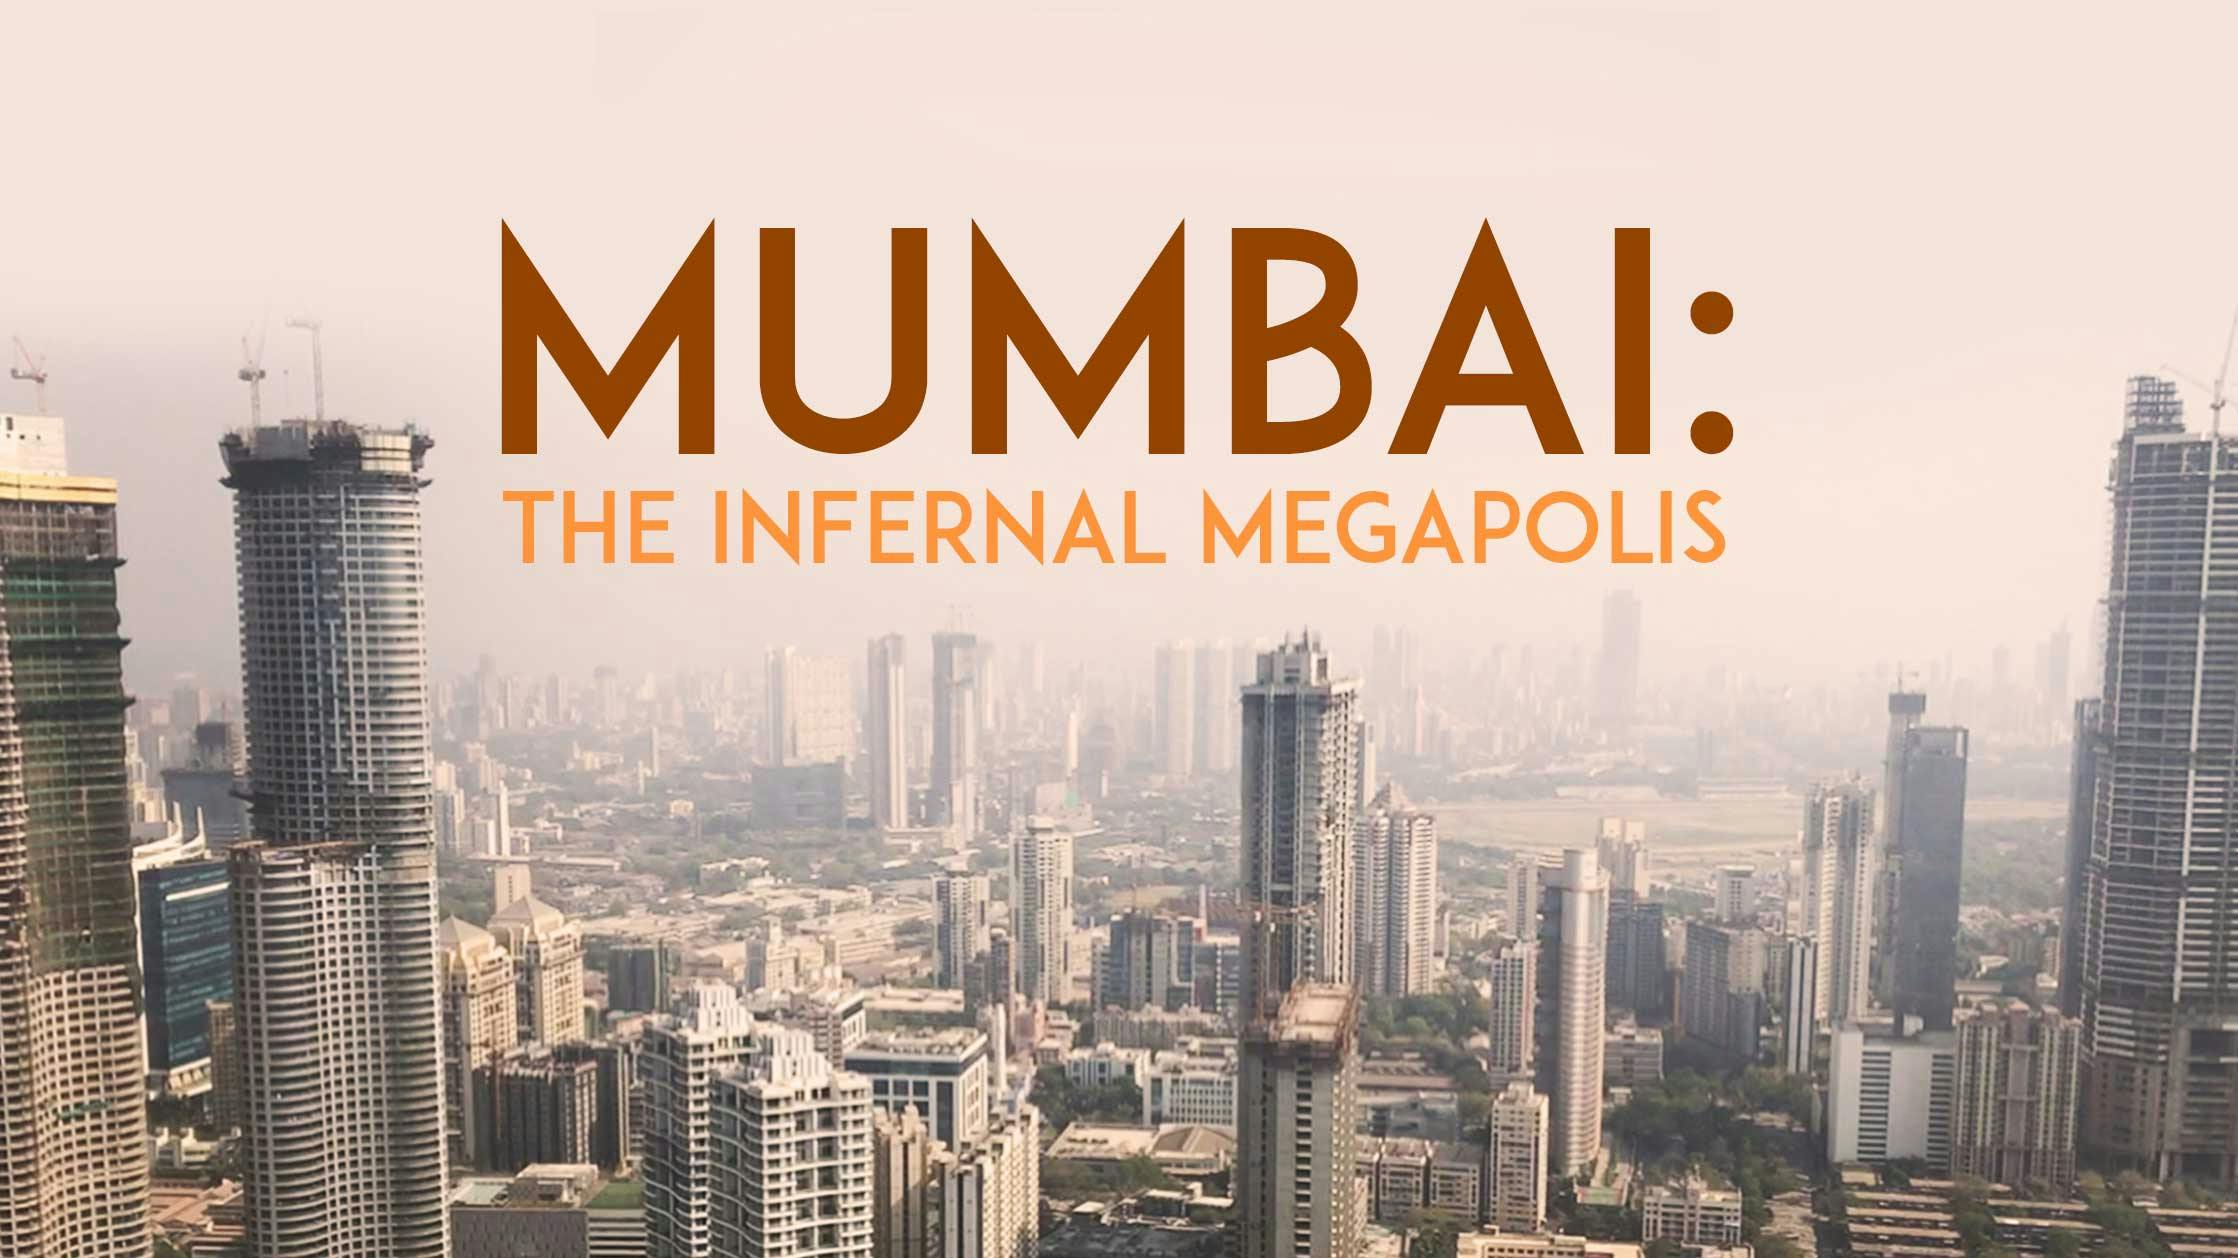 Mumbai: The Infernal Megapolis